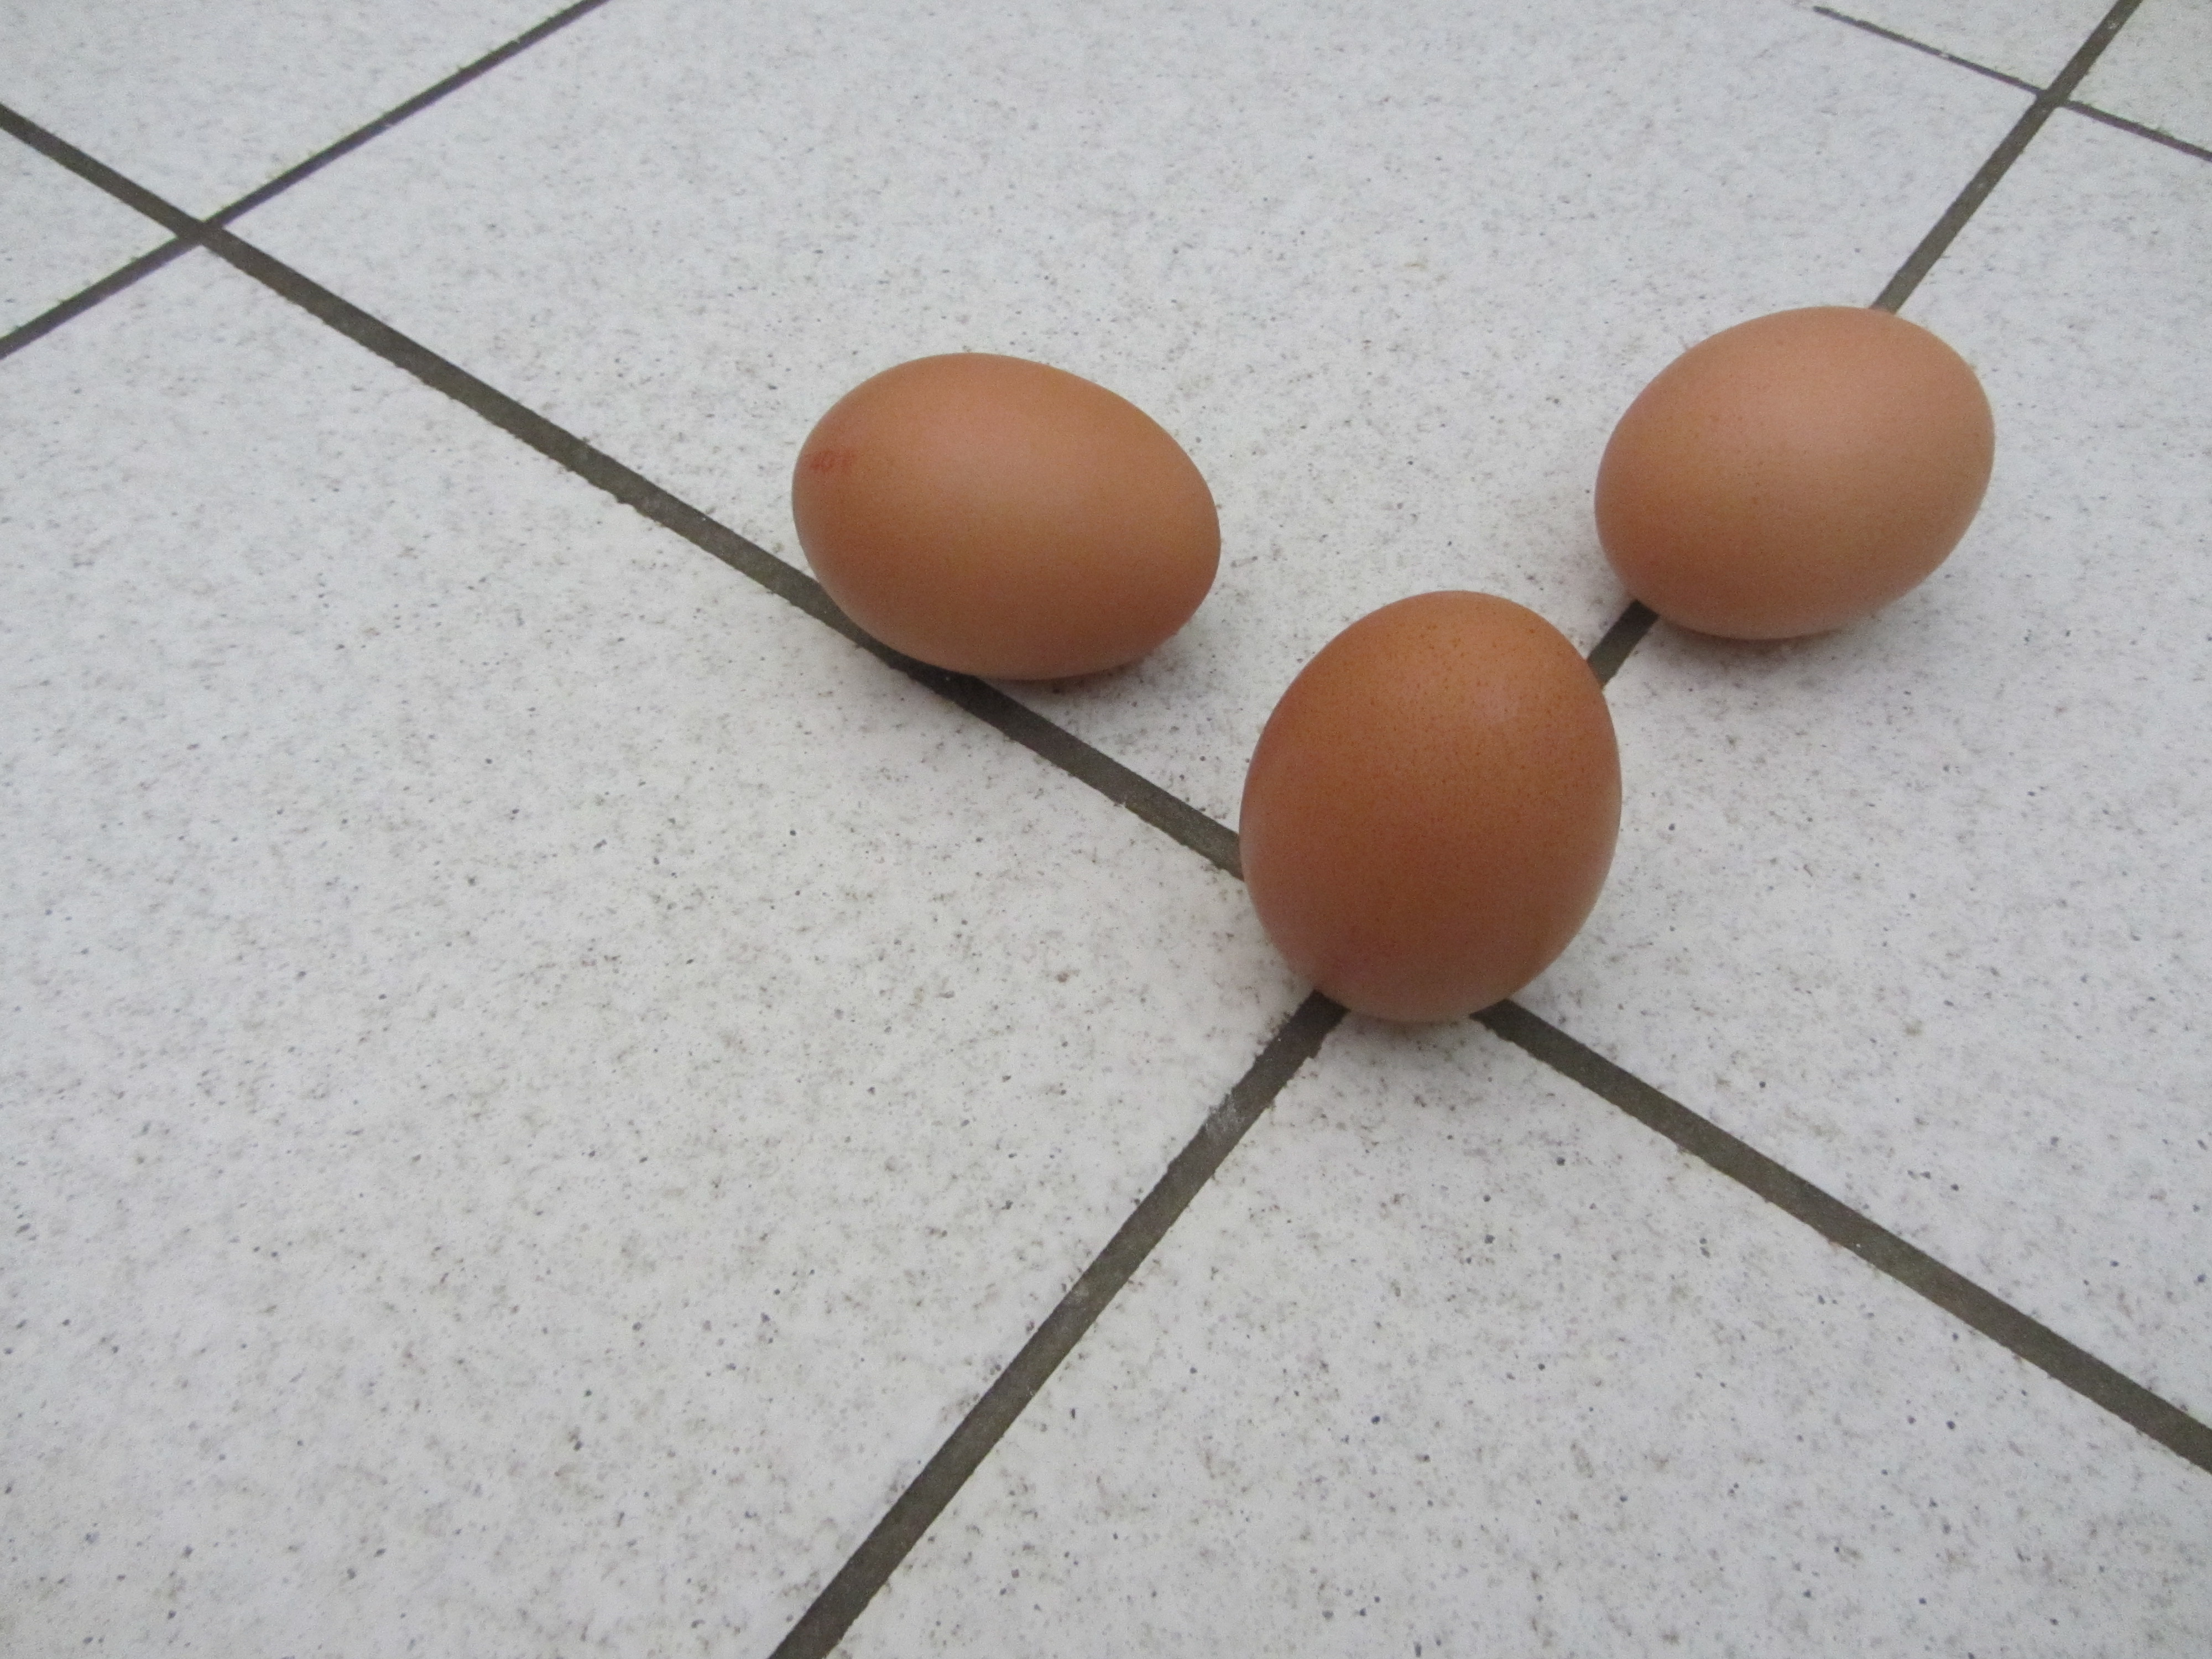 Datei:Eier(Kochen).JPG